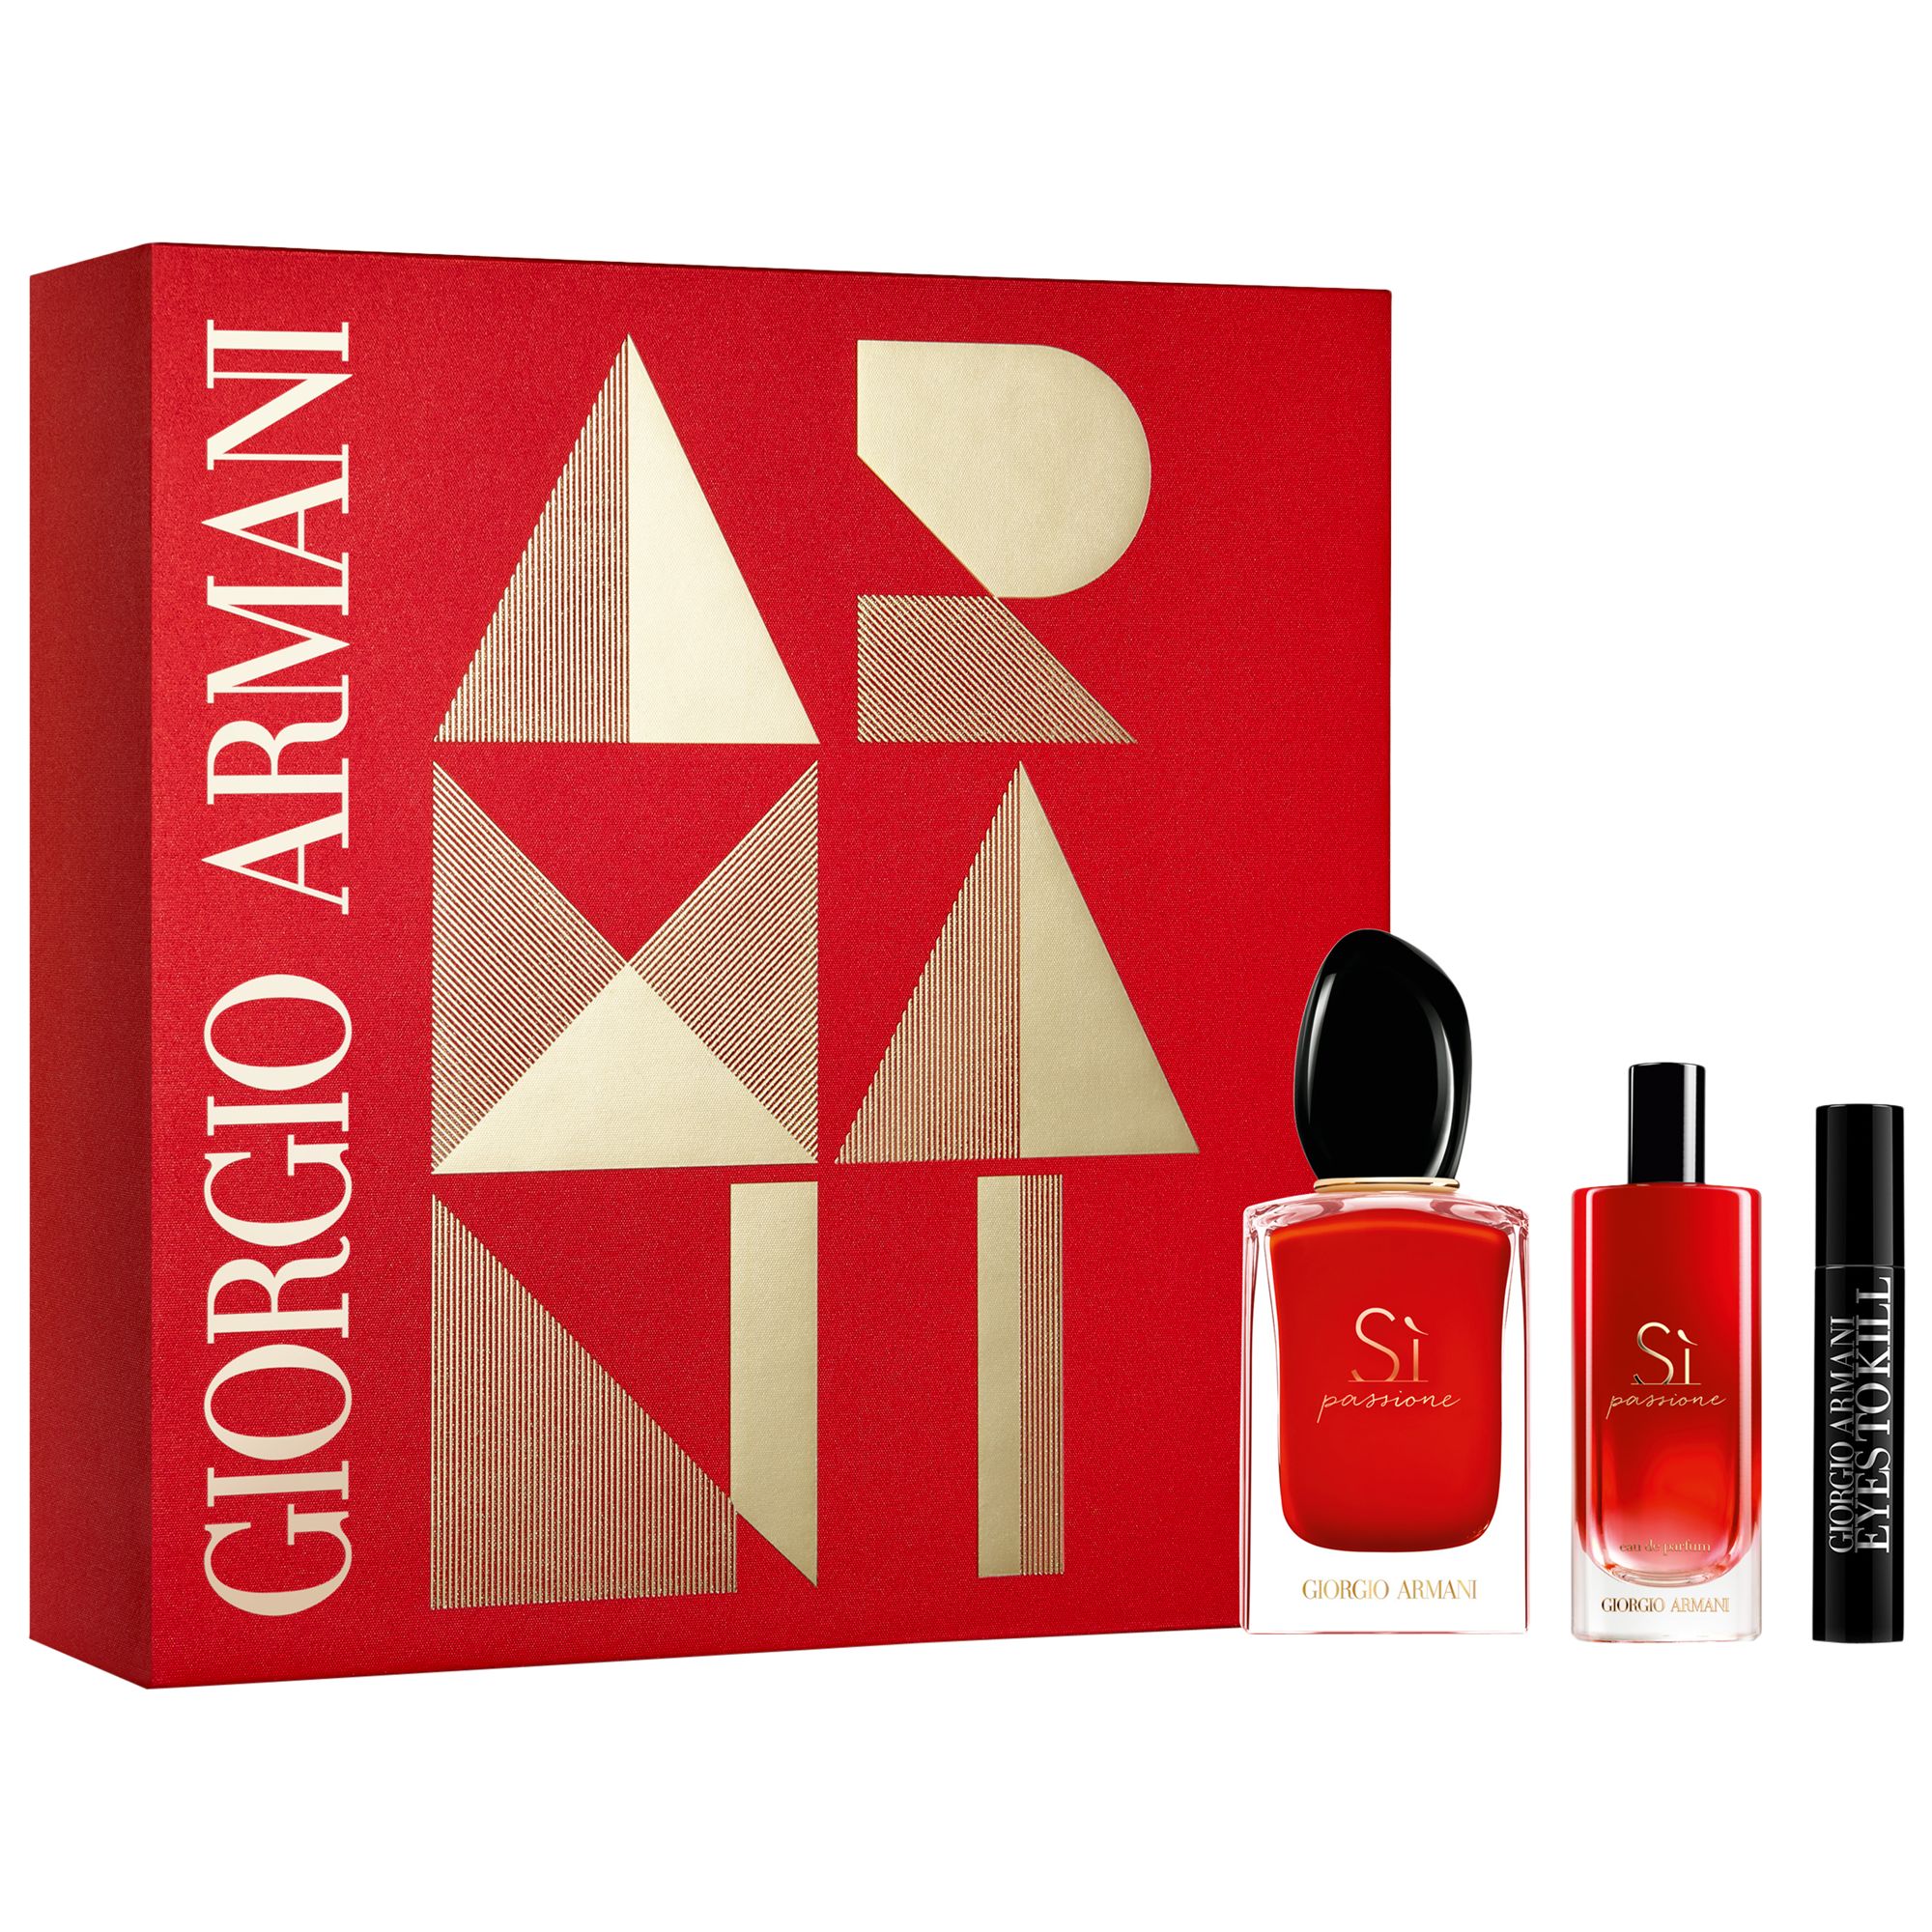 Giorgio Armani Sì Passione Eau de Parfum 50ml + Mascara Gift Set